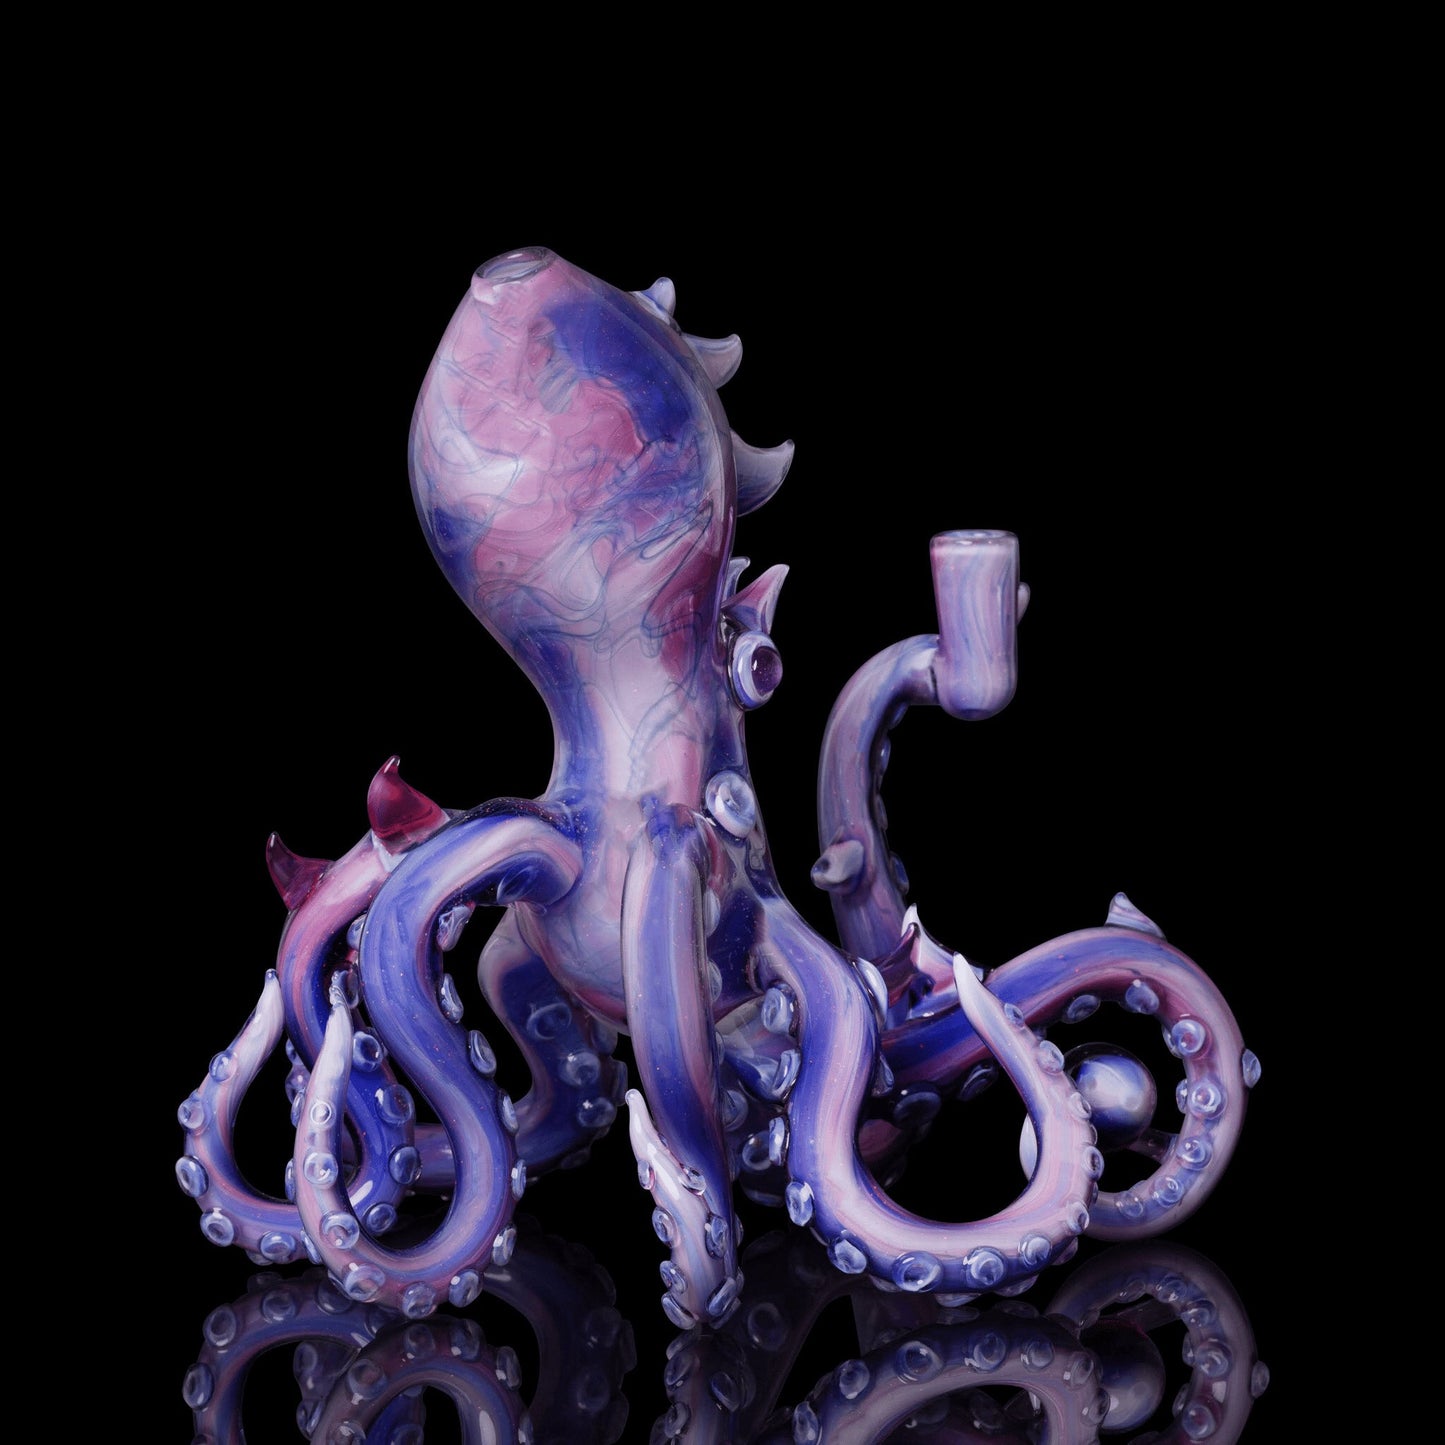 exquisite art piece - Collab Kraken by Wicked Glass x Scomo Moanet (Scribble Season 2022)